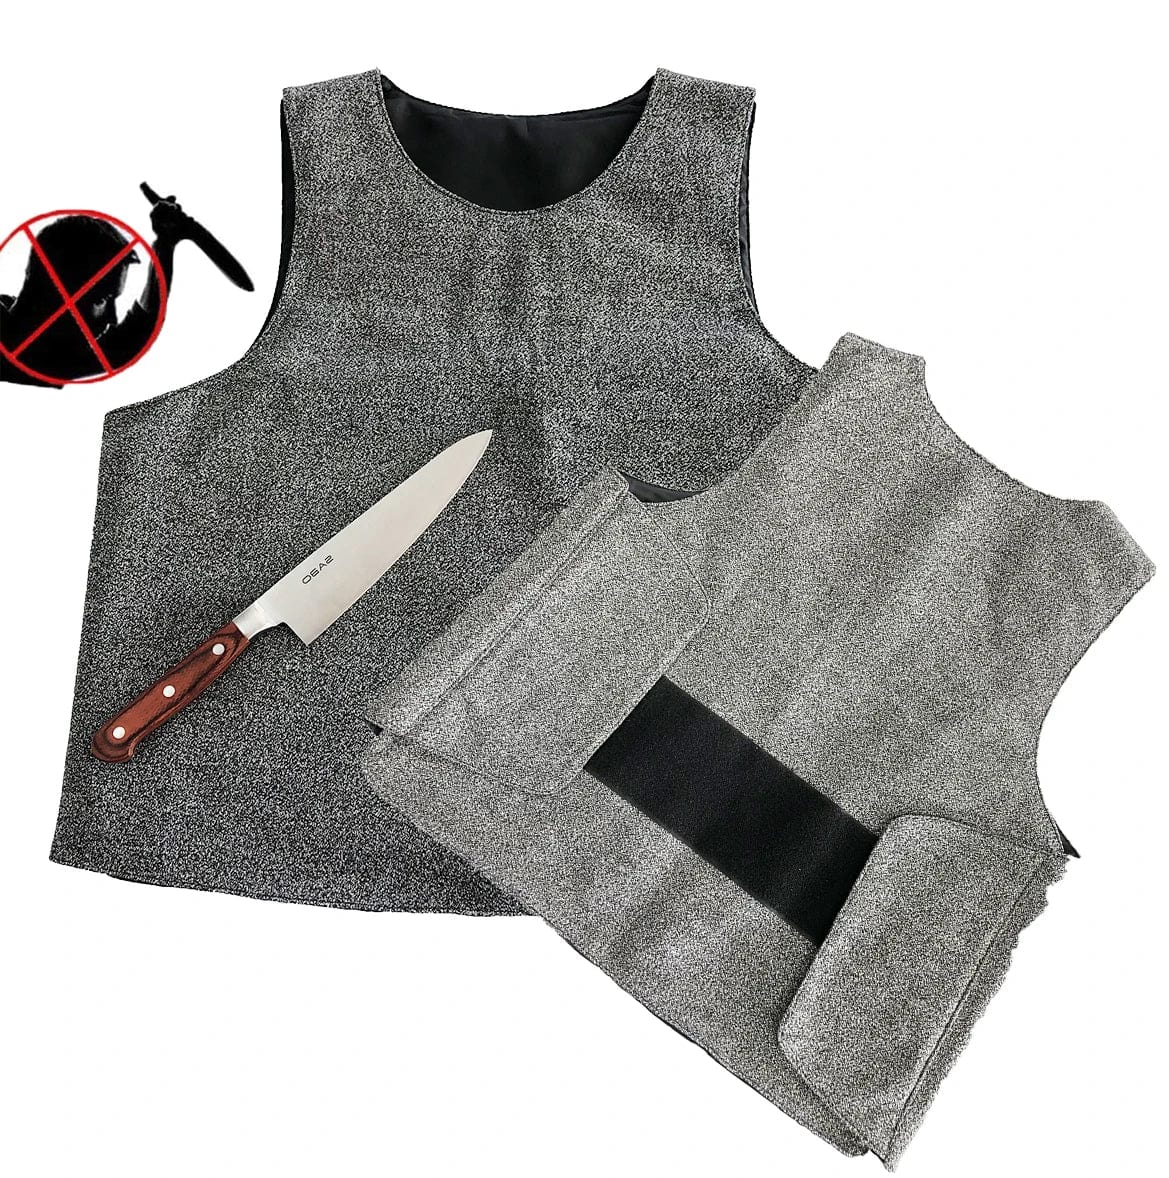 Level 5 anti-cut vest, EN388 HPPE, customized safety stab protection vest